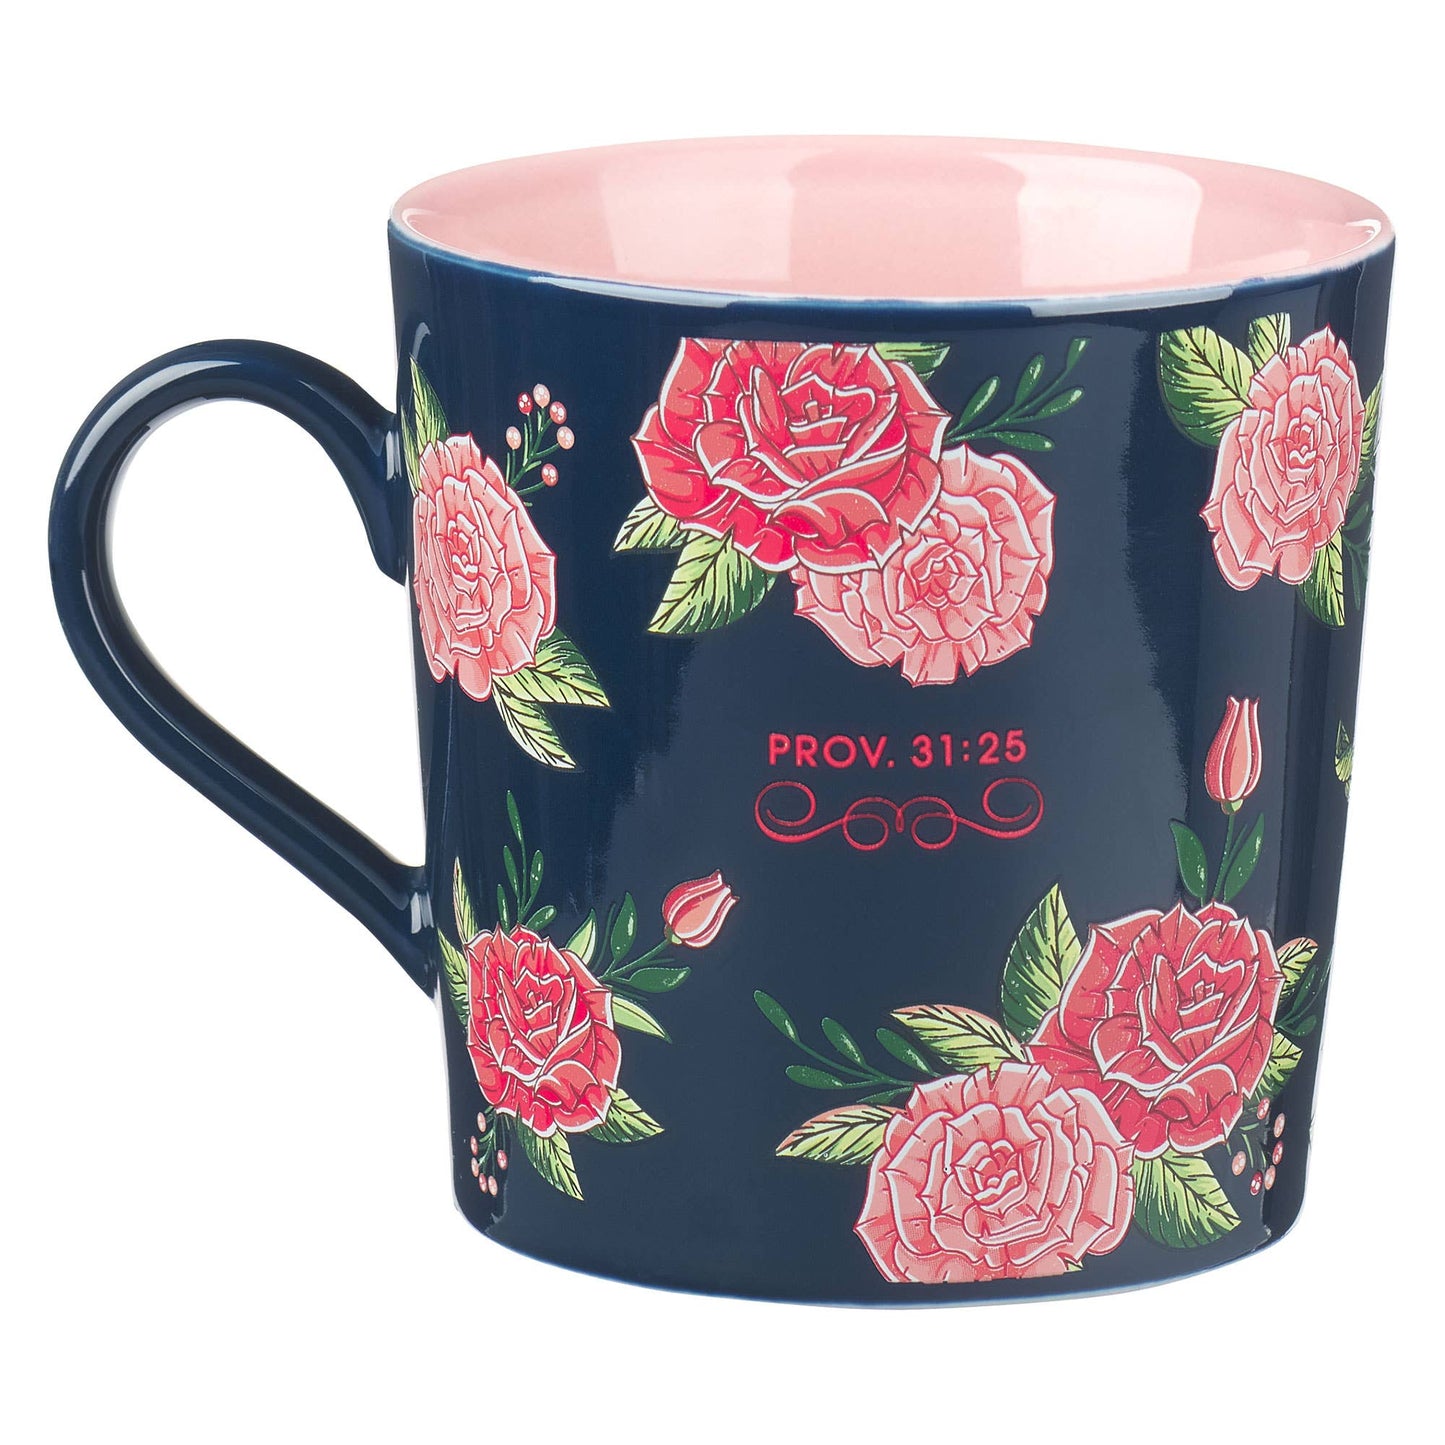 Strength & Dignity Pink Roses Coffee Mug